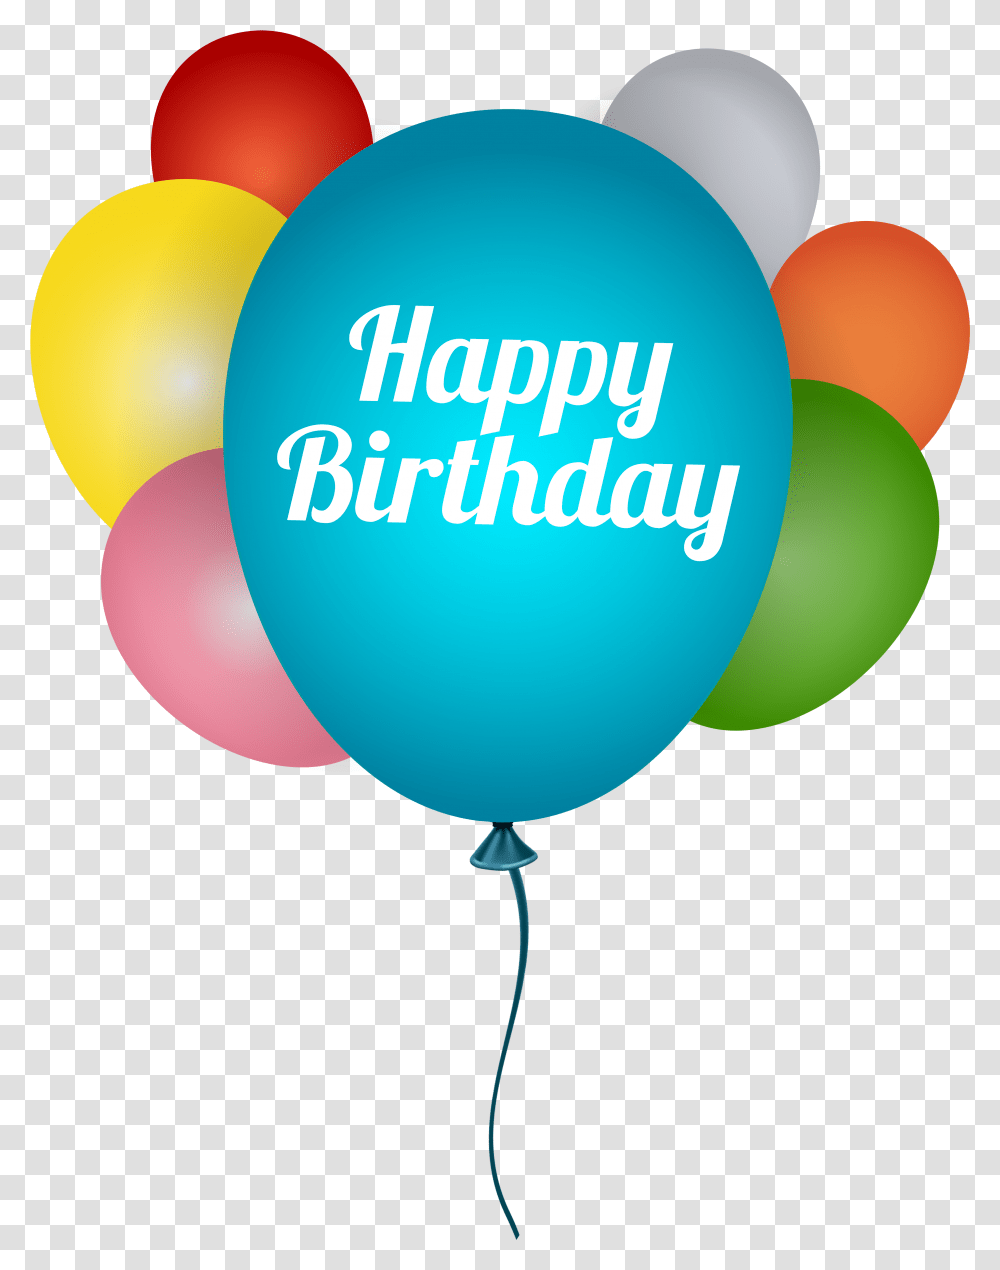 Birthday Cake Wish Greeting Card New Happy Birthday Balloon Background Transparent Png